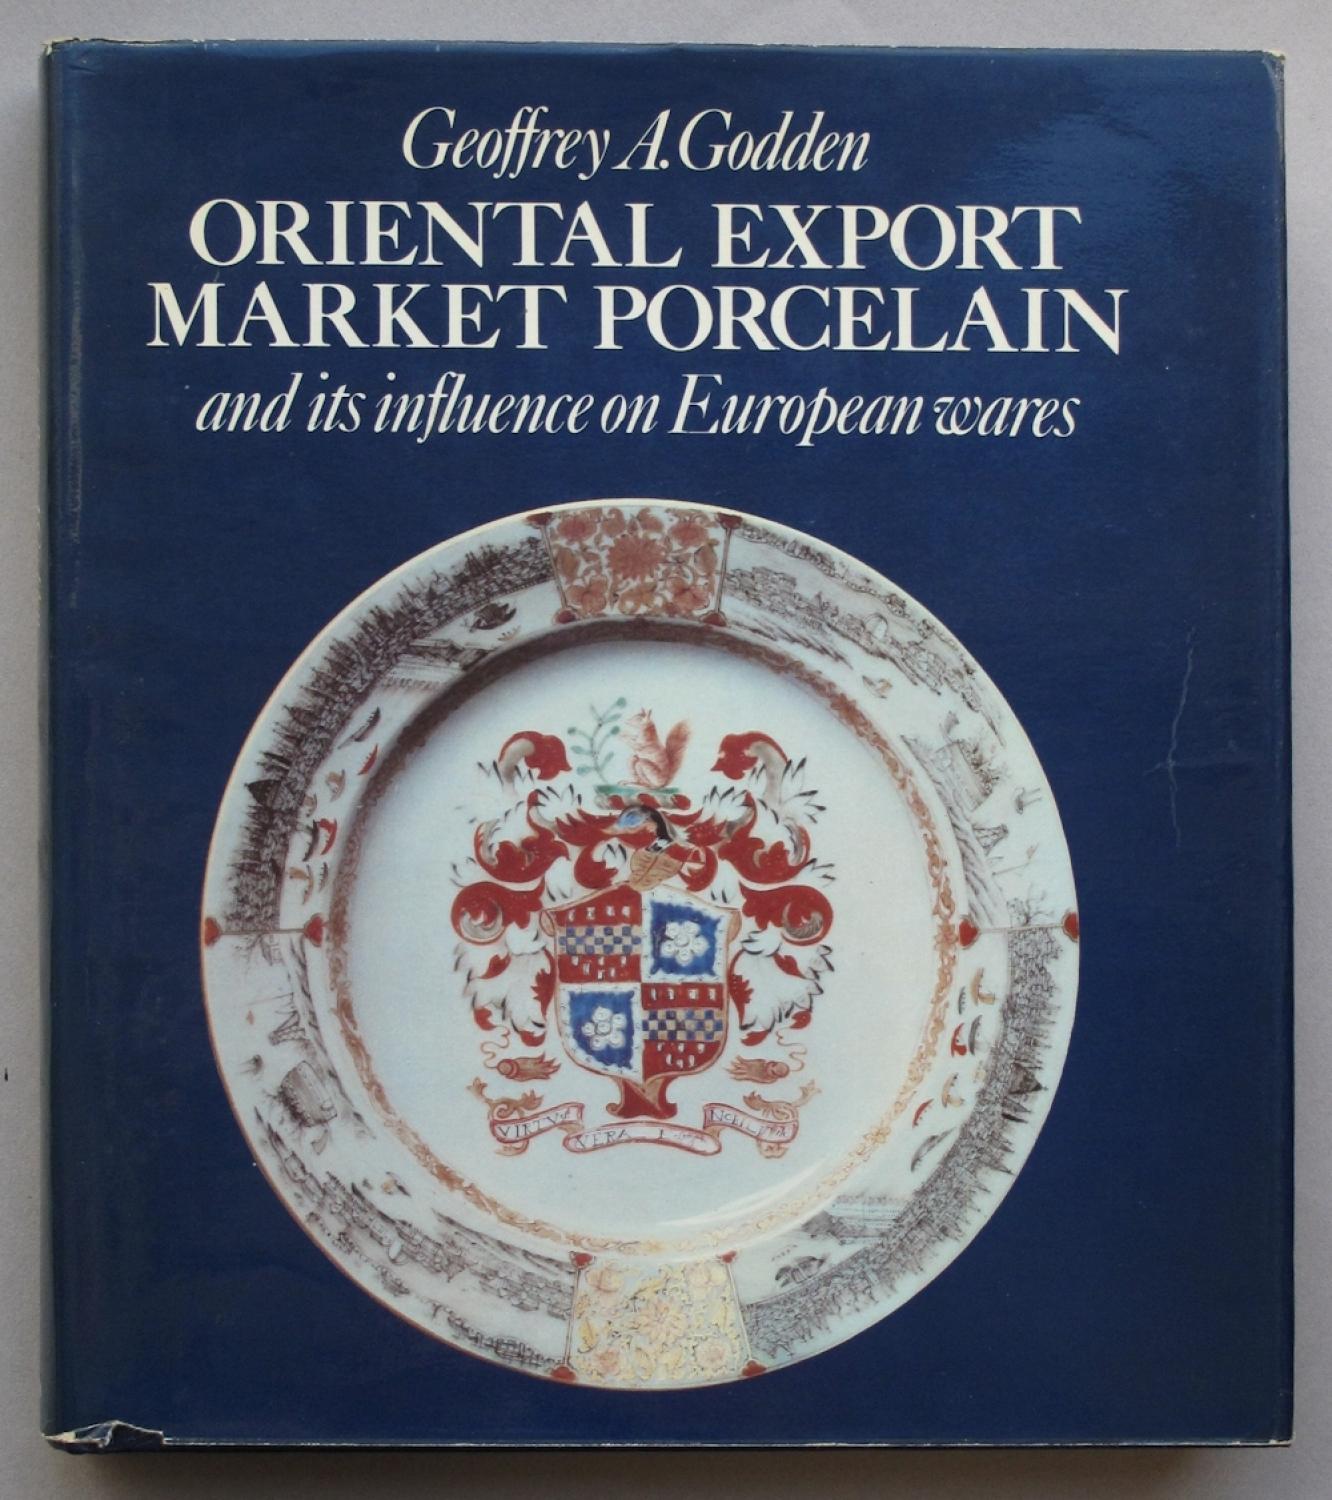 Godden: Oriental Export Market Porcelain